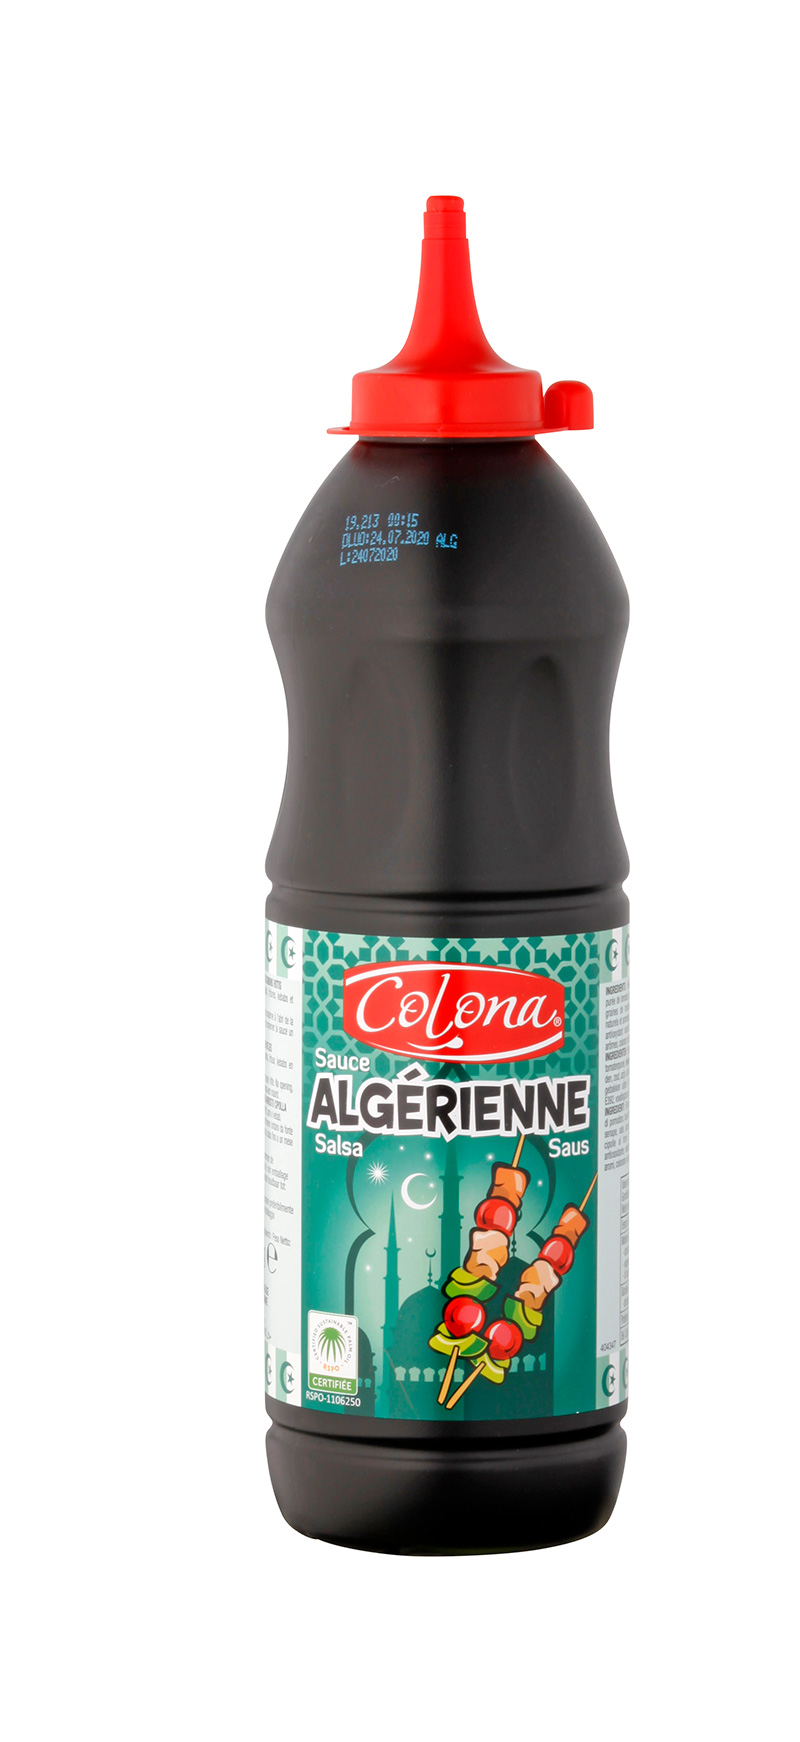 Colona Algerienne Sauce 5L